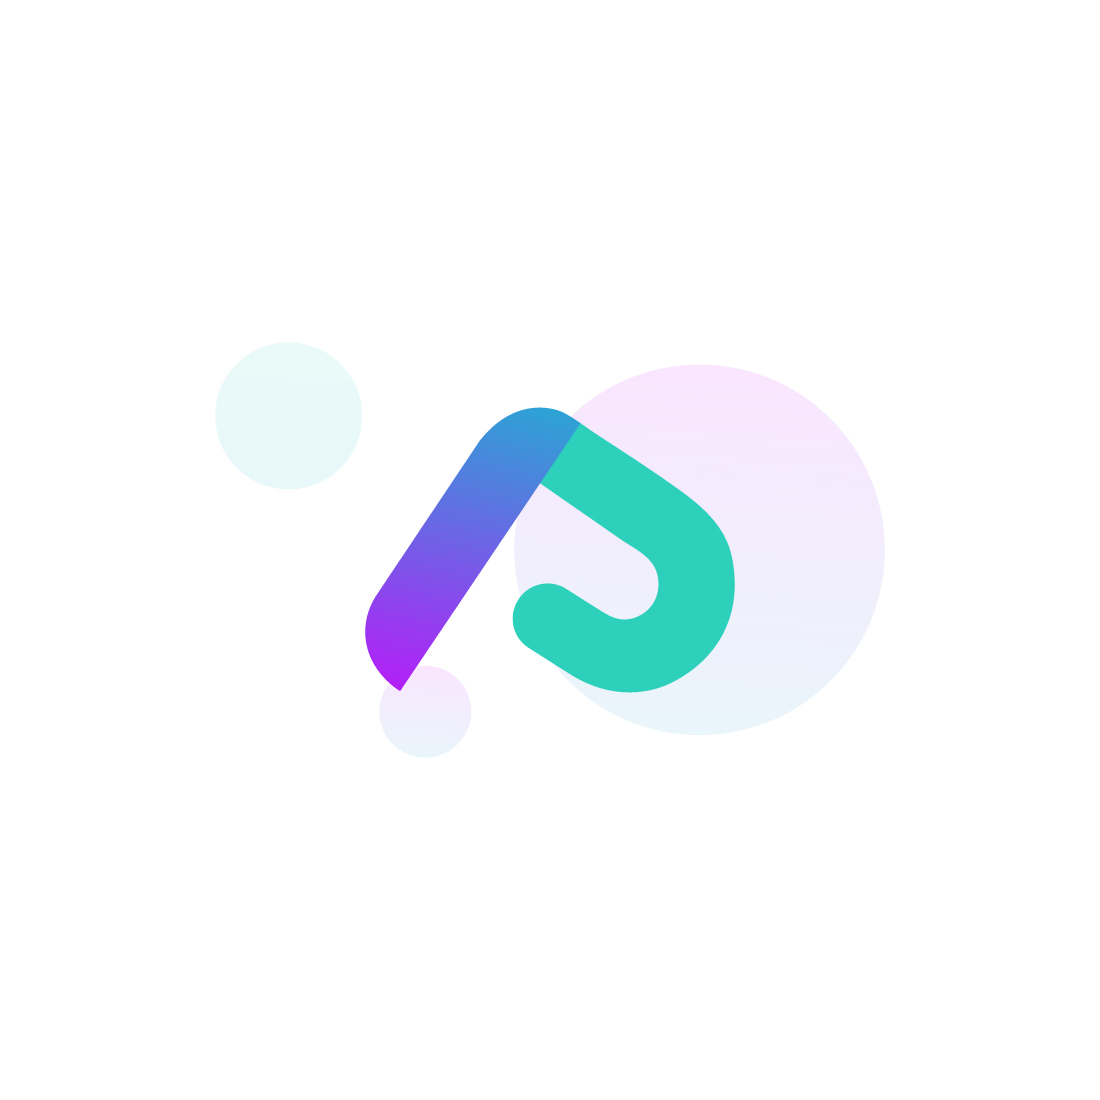 P Letter Logo Design previews.